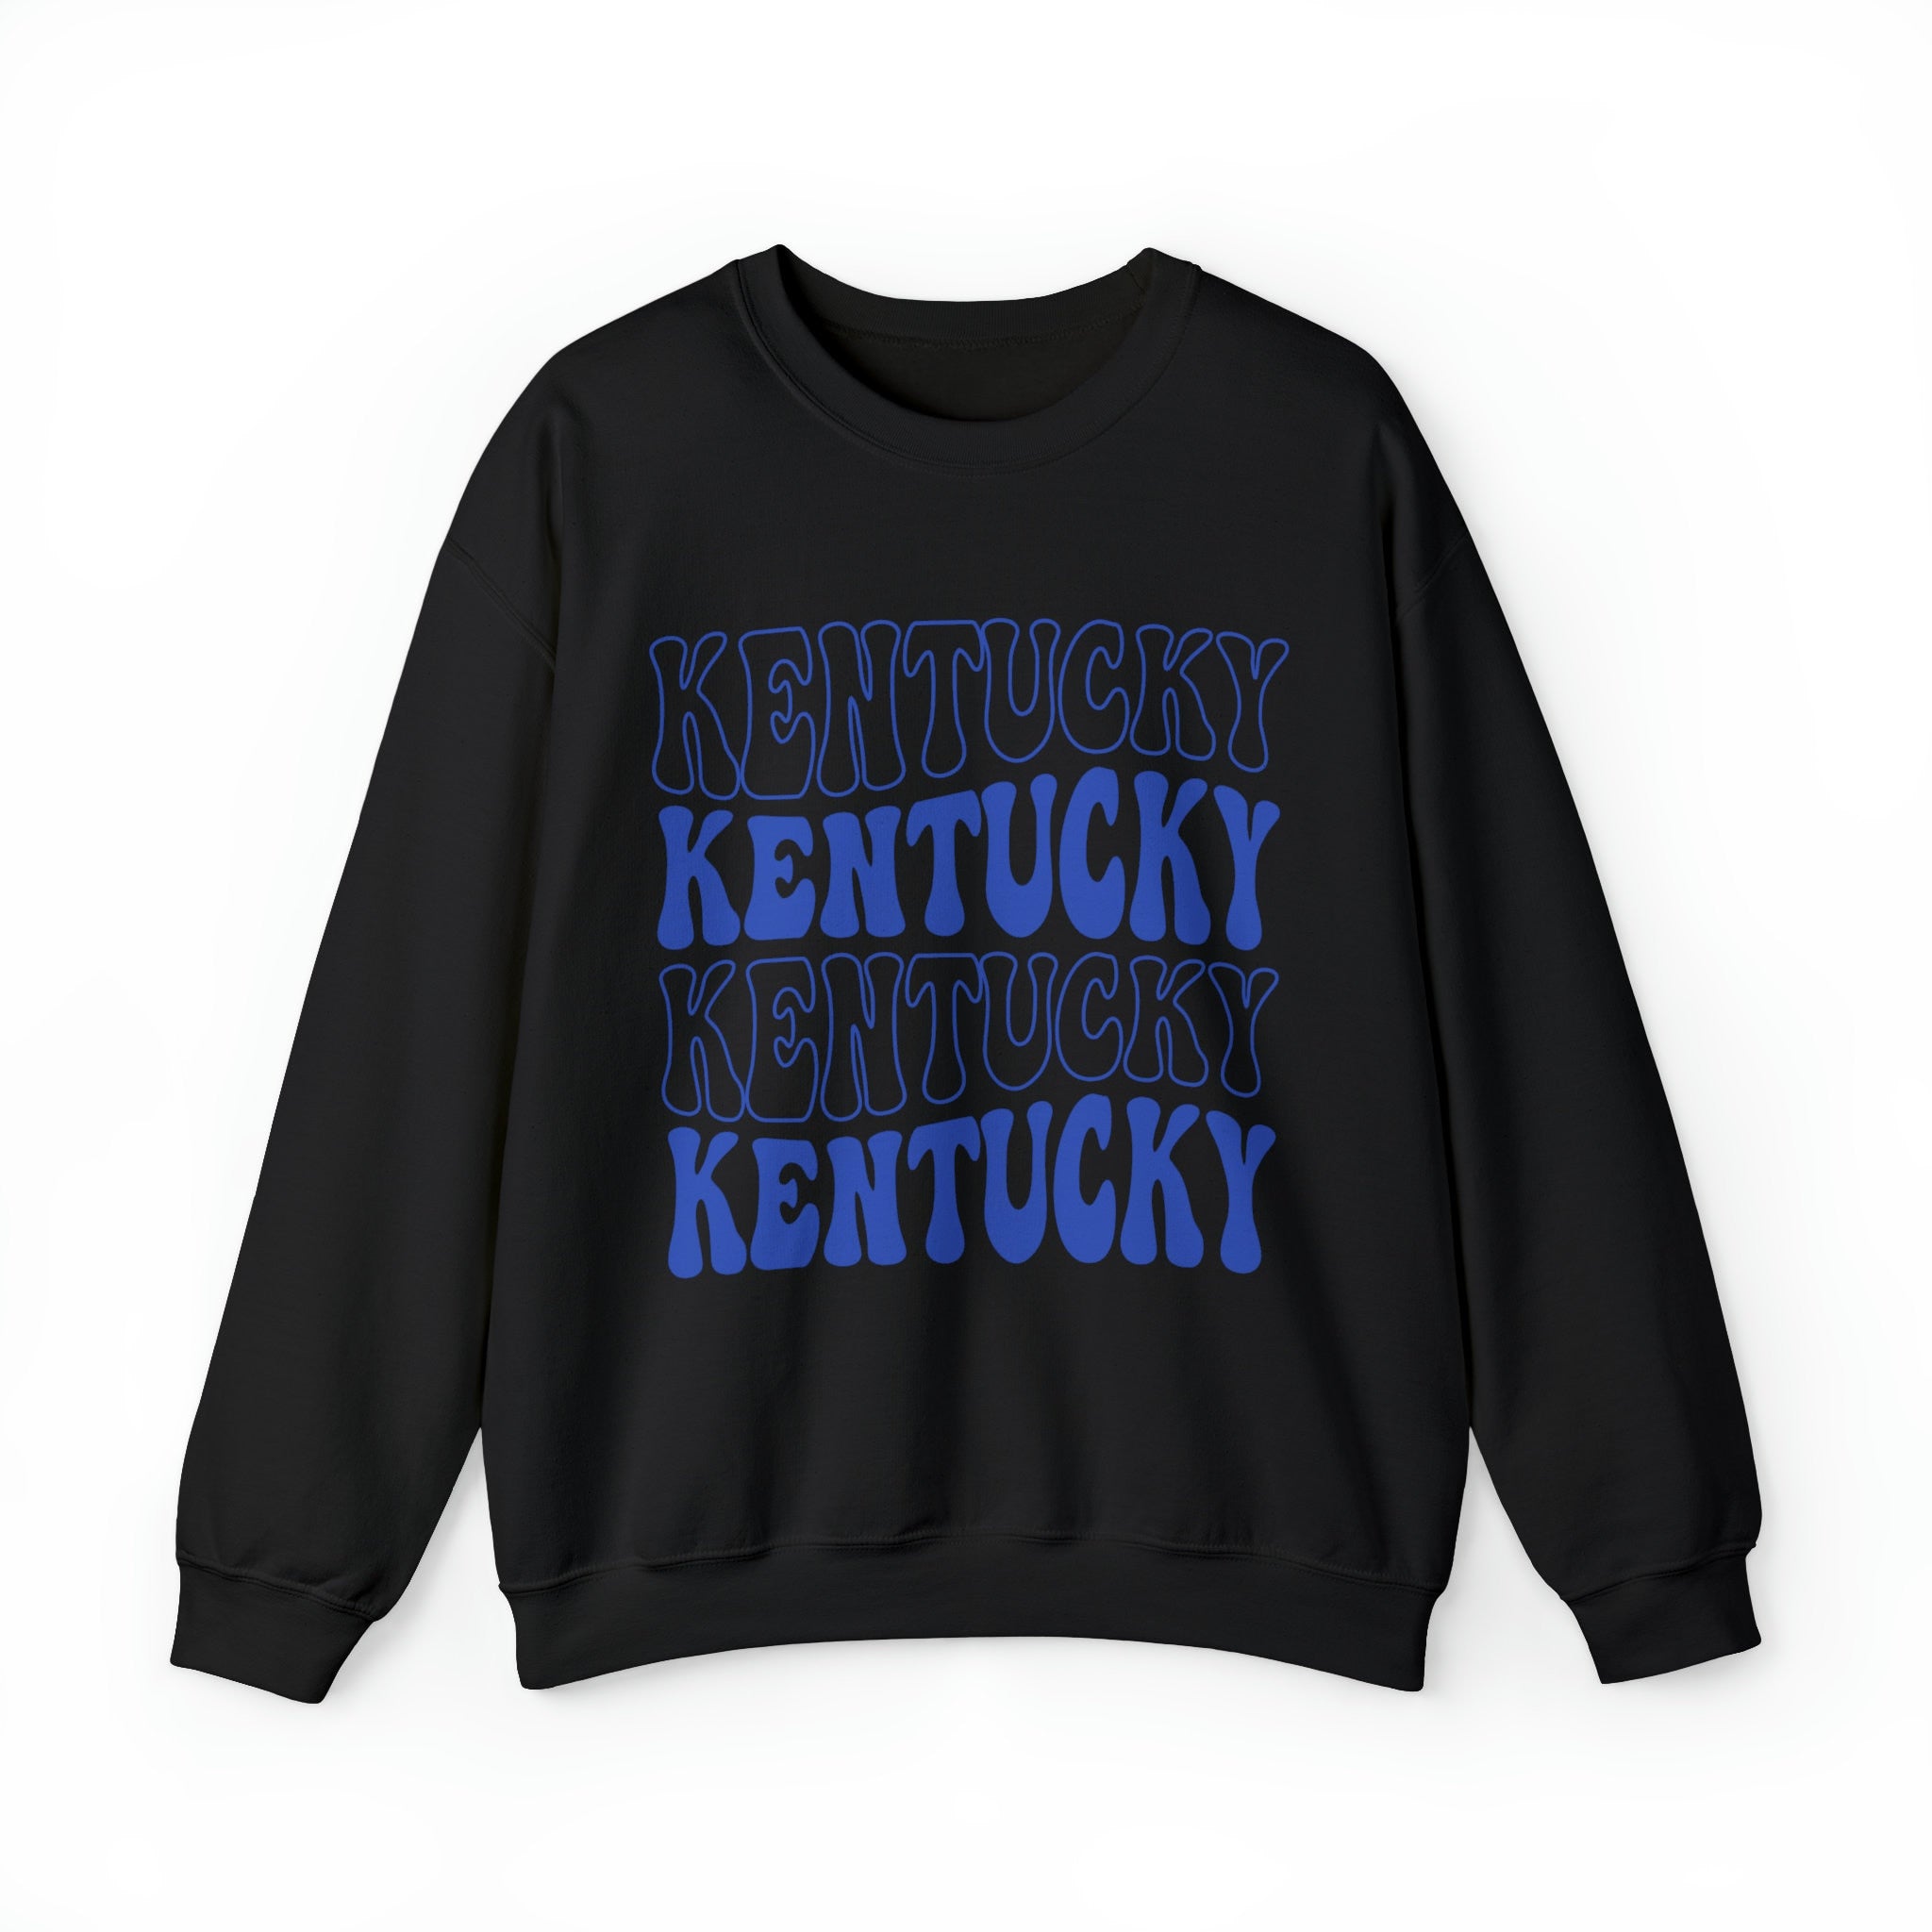 Kentucky Football Sweatshirt, Wildcats Sweatshirt Vintage College Sweatshirt KY Basketball Clothing University Retro Game Day Apparel